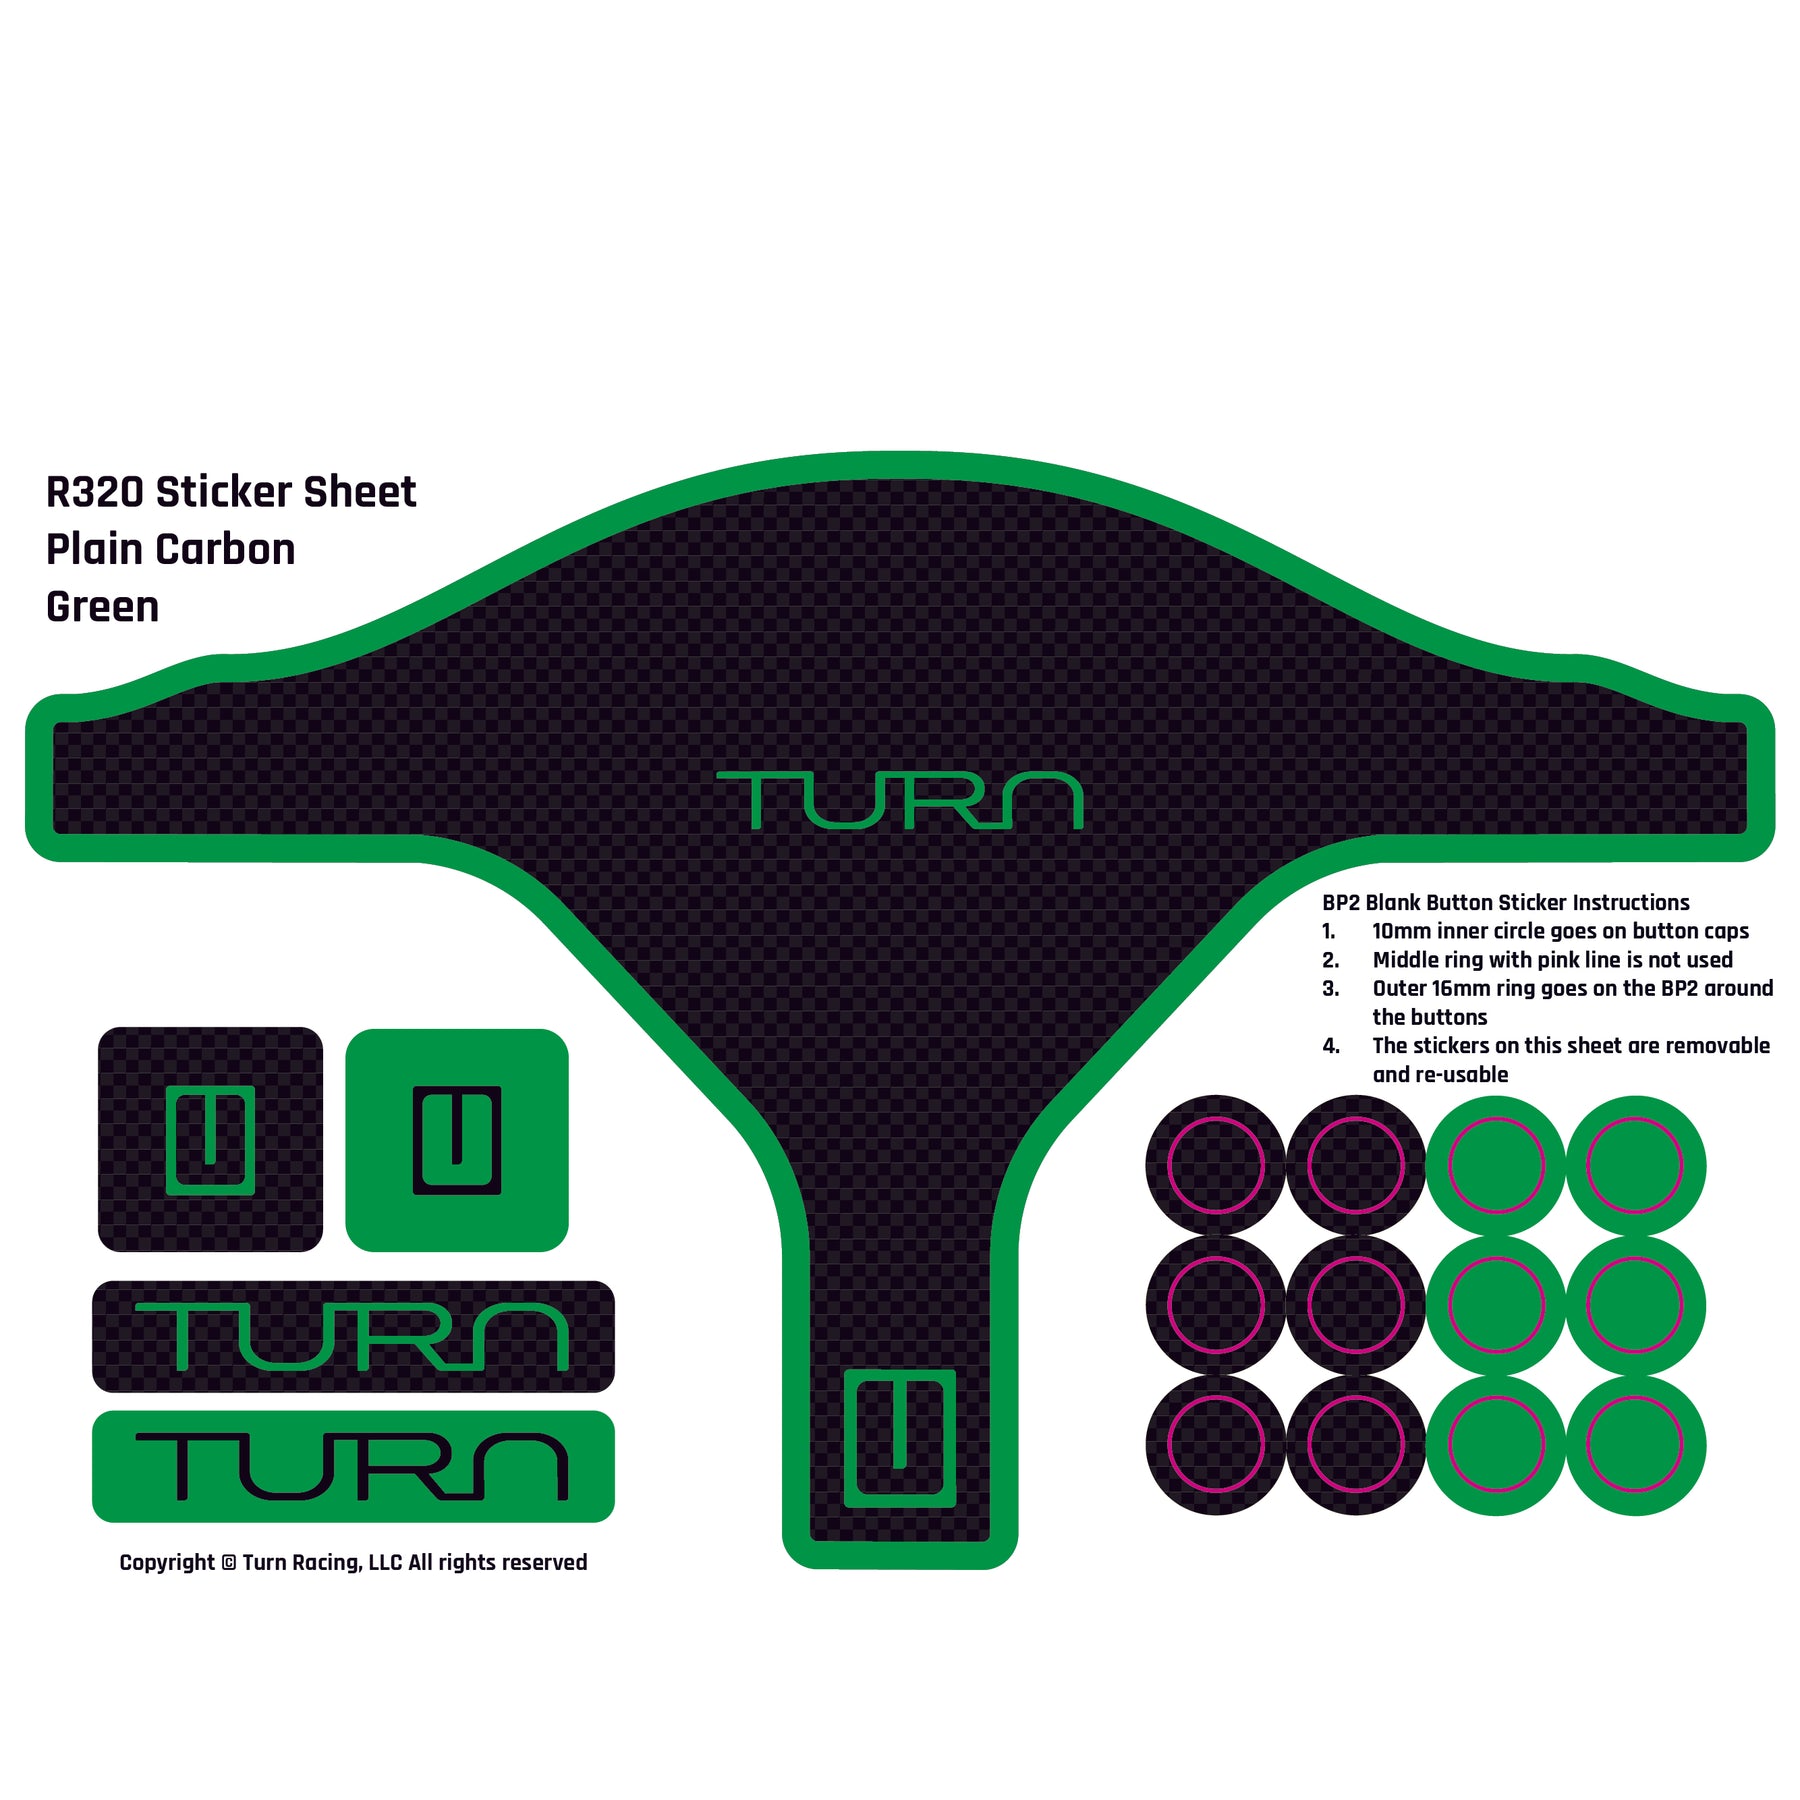 Turn R320 Sticker Sheet - Plain Carbon Green